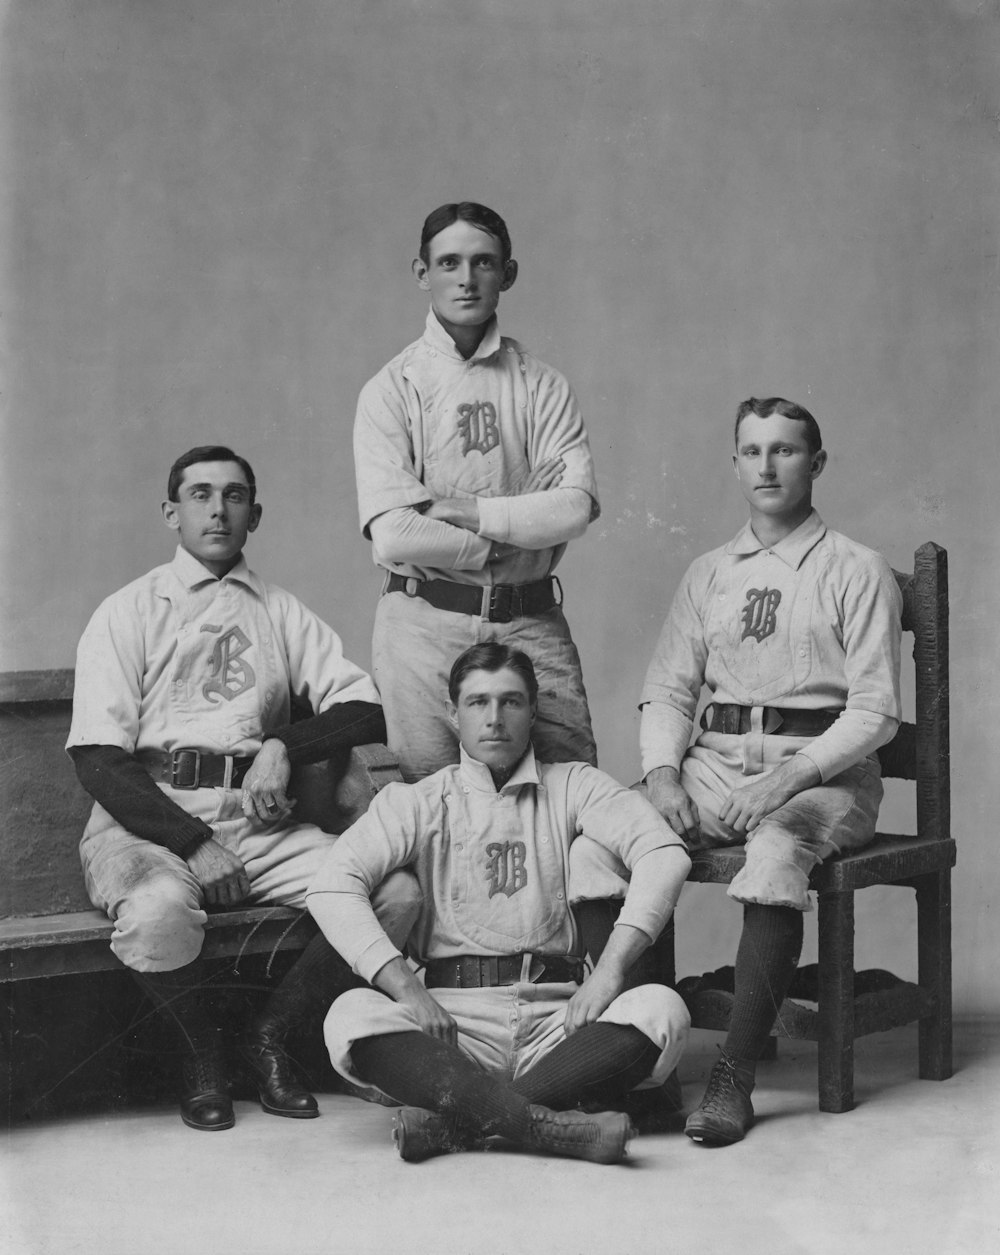 a black and white photo of a baseball team